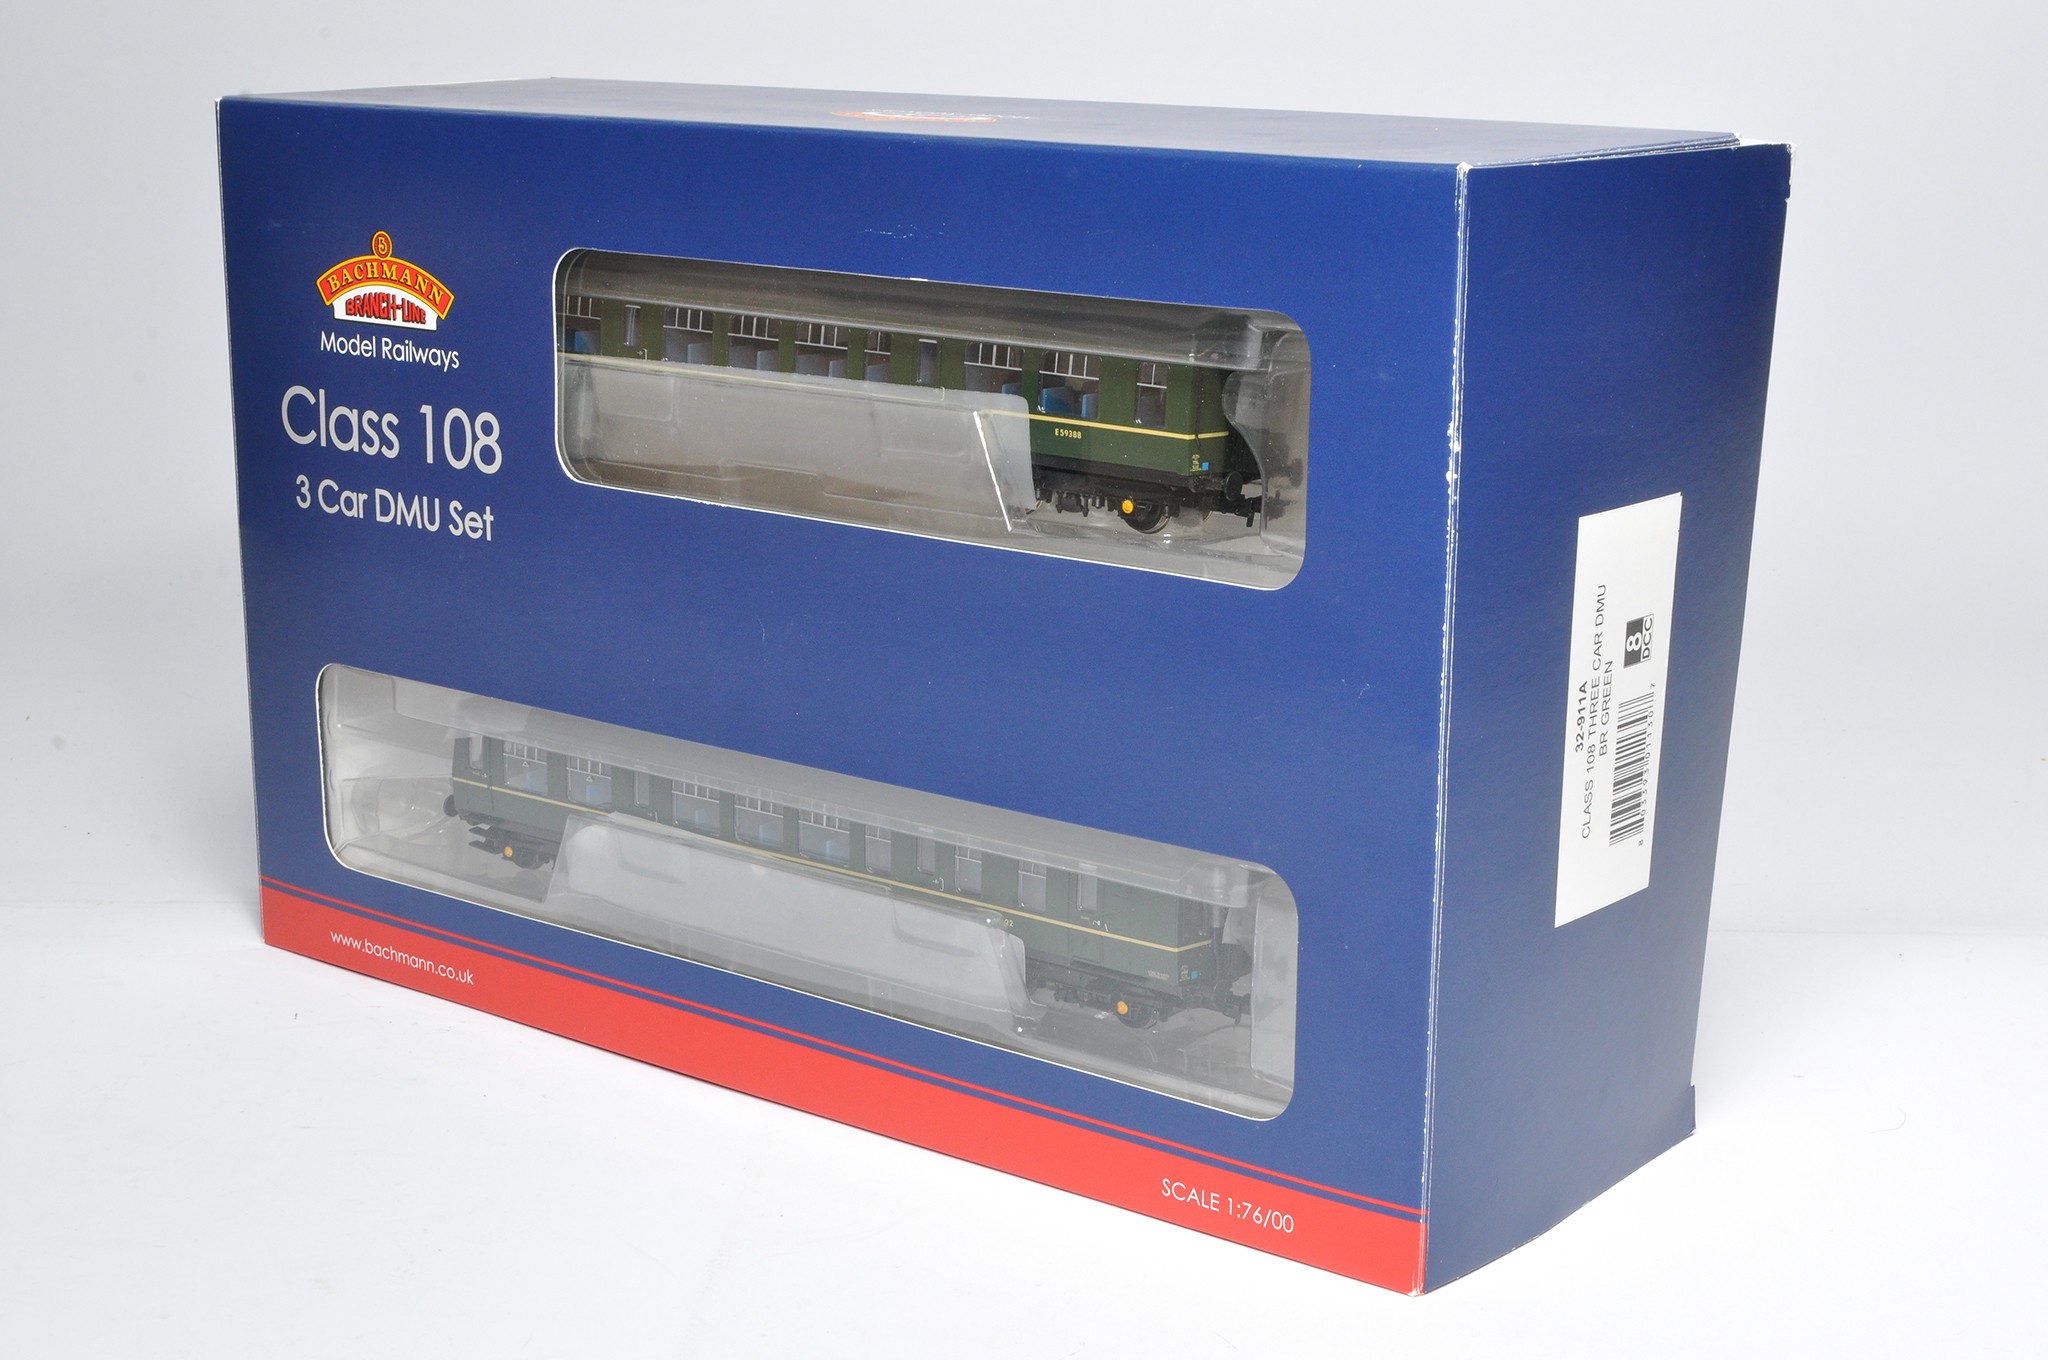 Bachmann Model Railway comprising locomotive issue No. 32-911A Class 108 Three Car DMU. Looks to